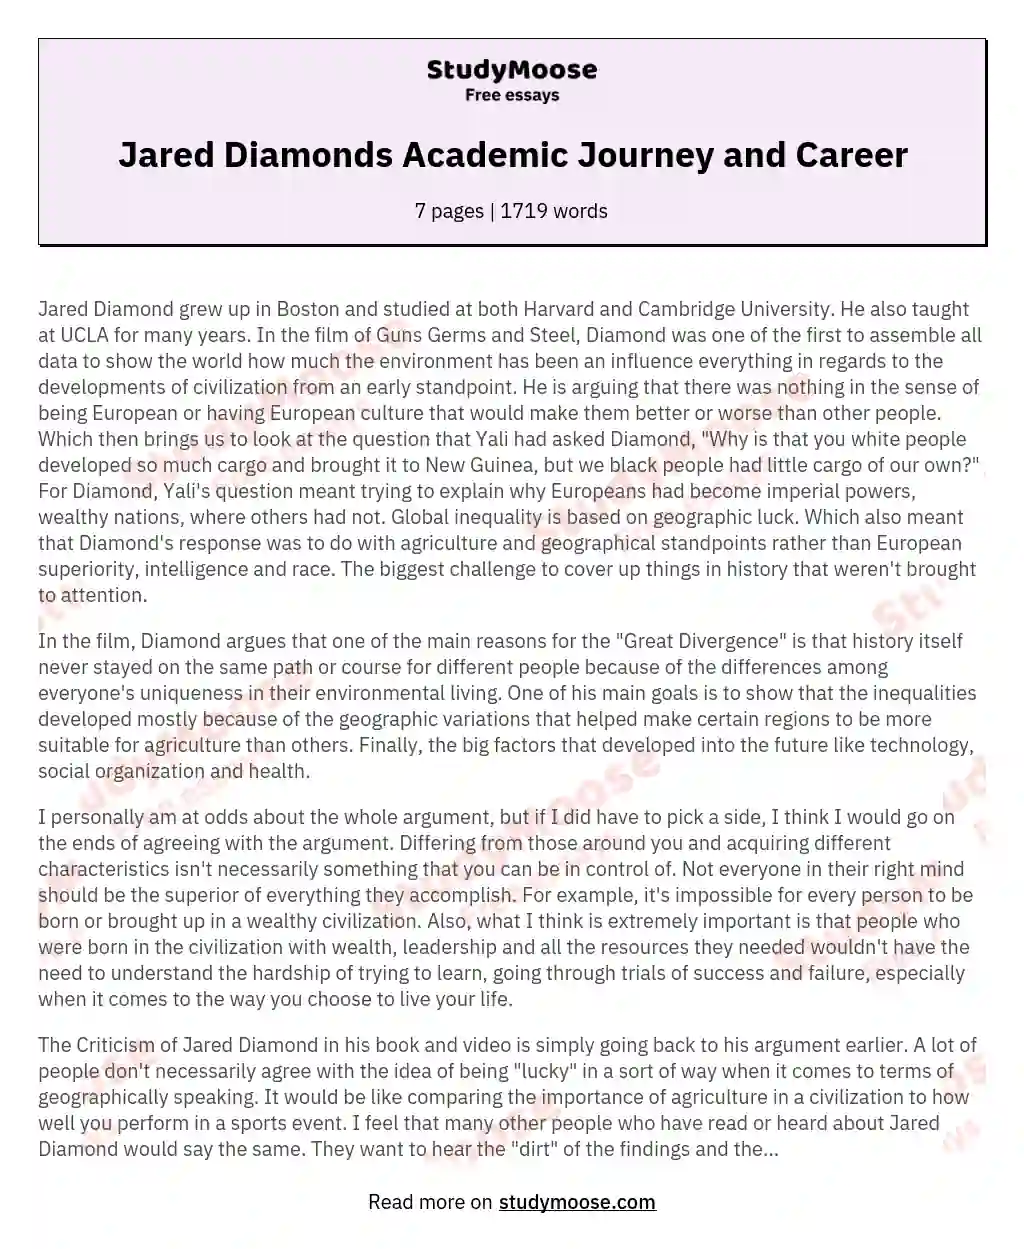 Jared Diamonds Academic Journey and Career essay